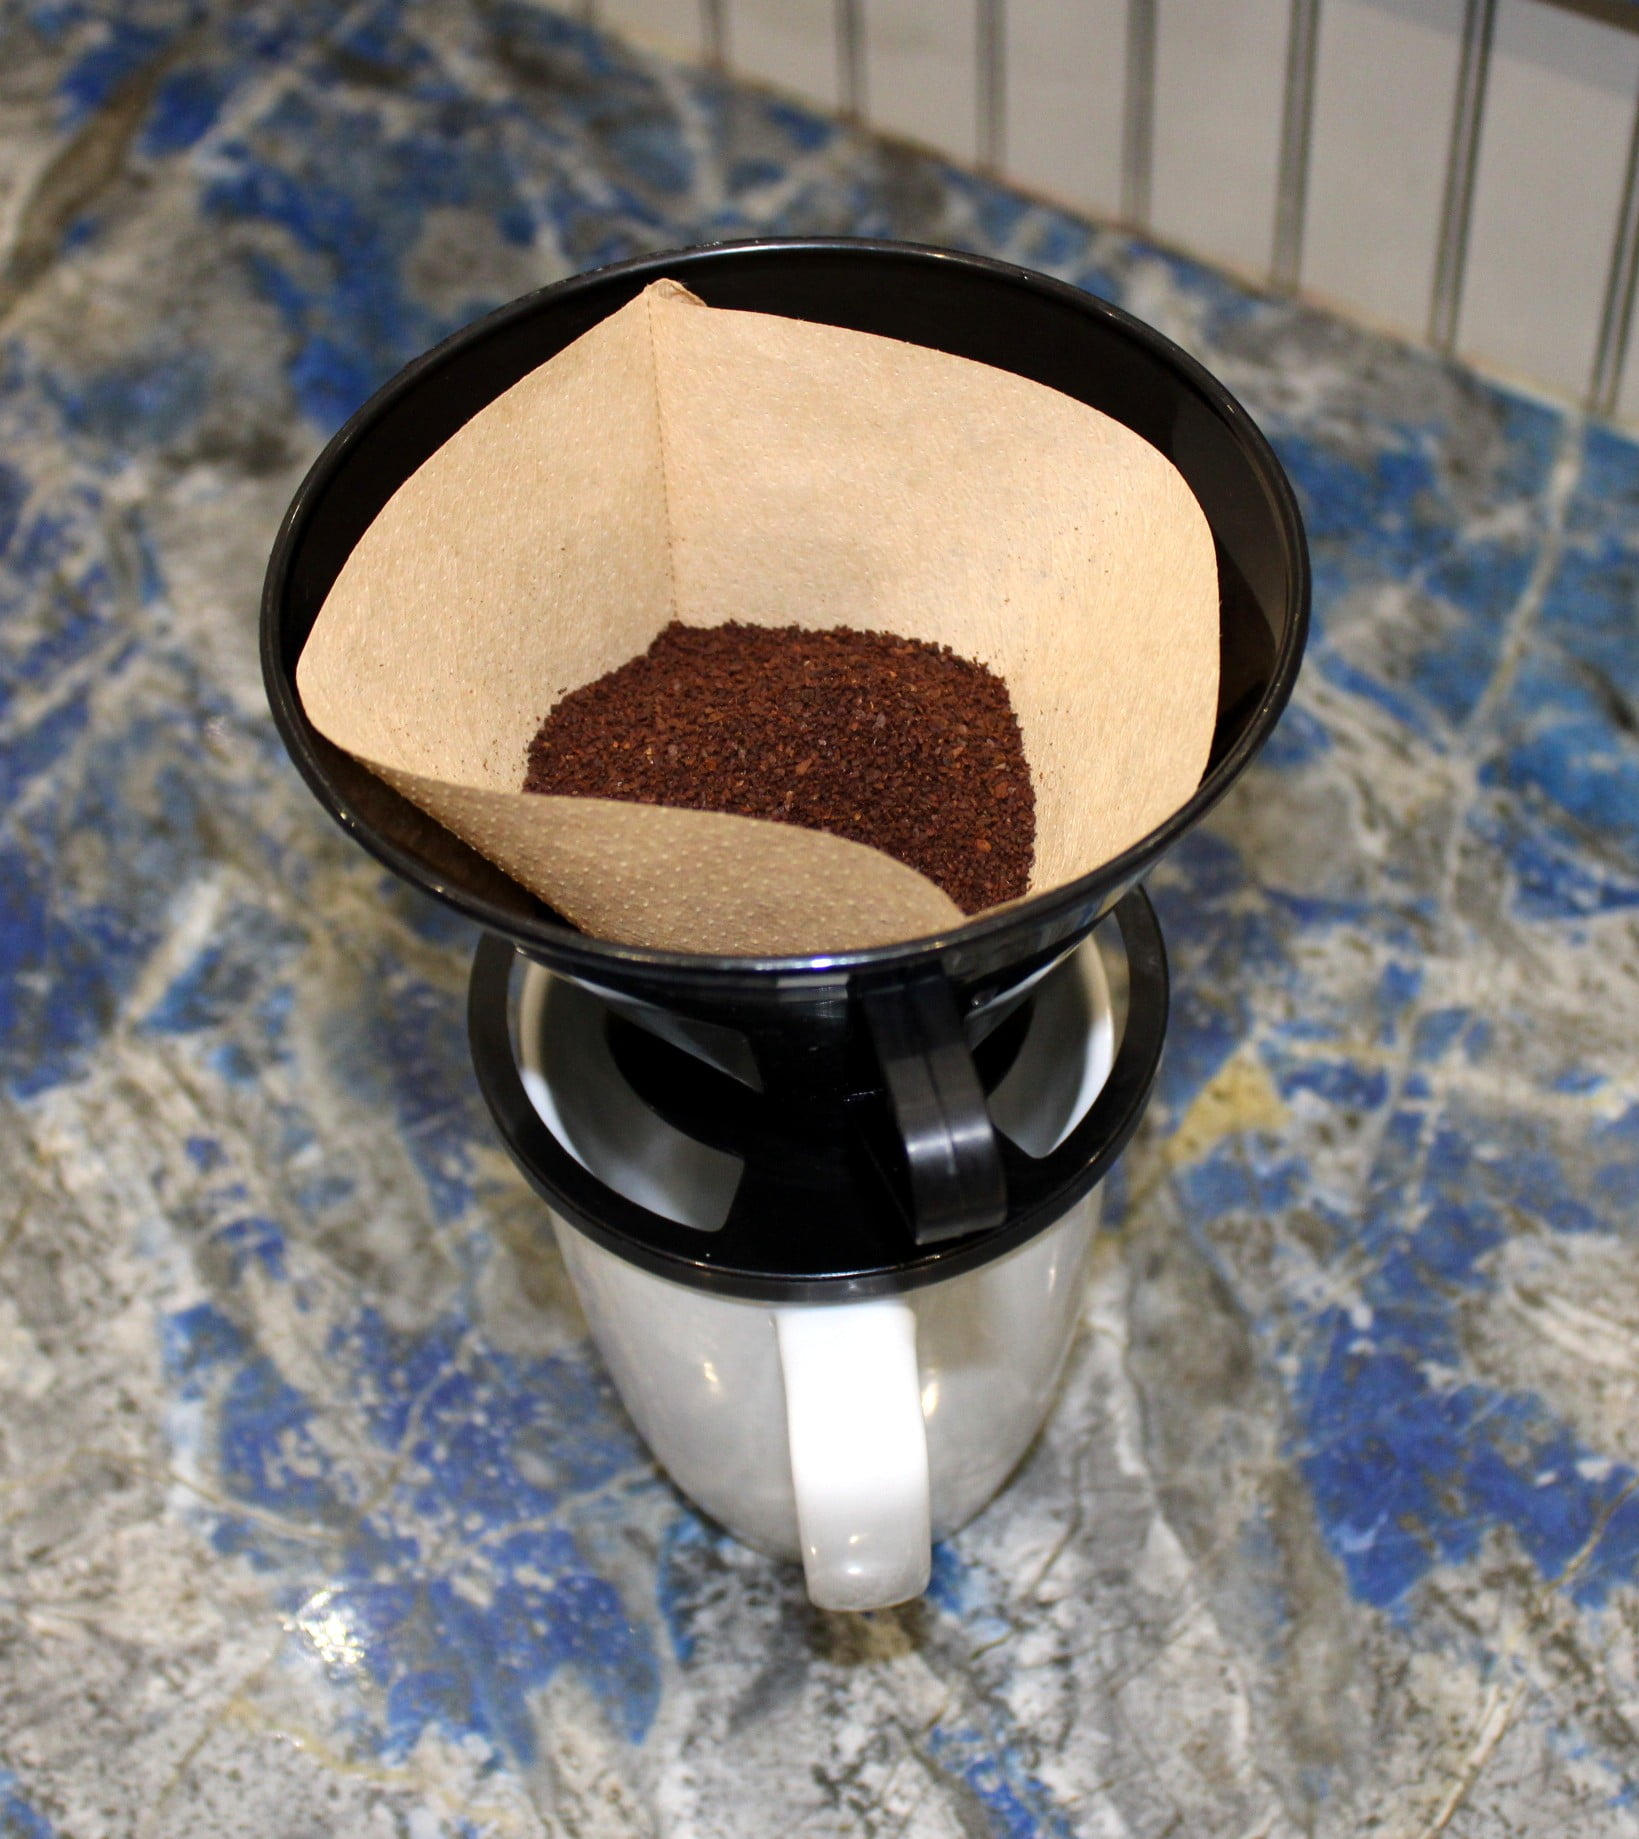 Kettle Dripper Pour Over Coffee Maker – Semilla De Cafe-Have it